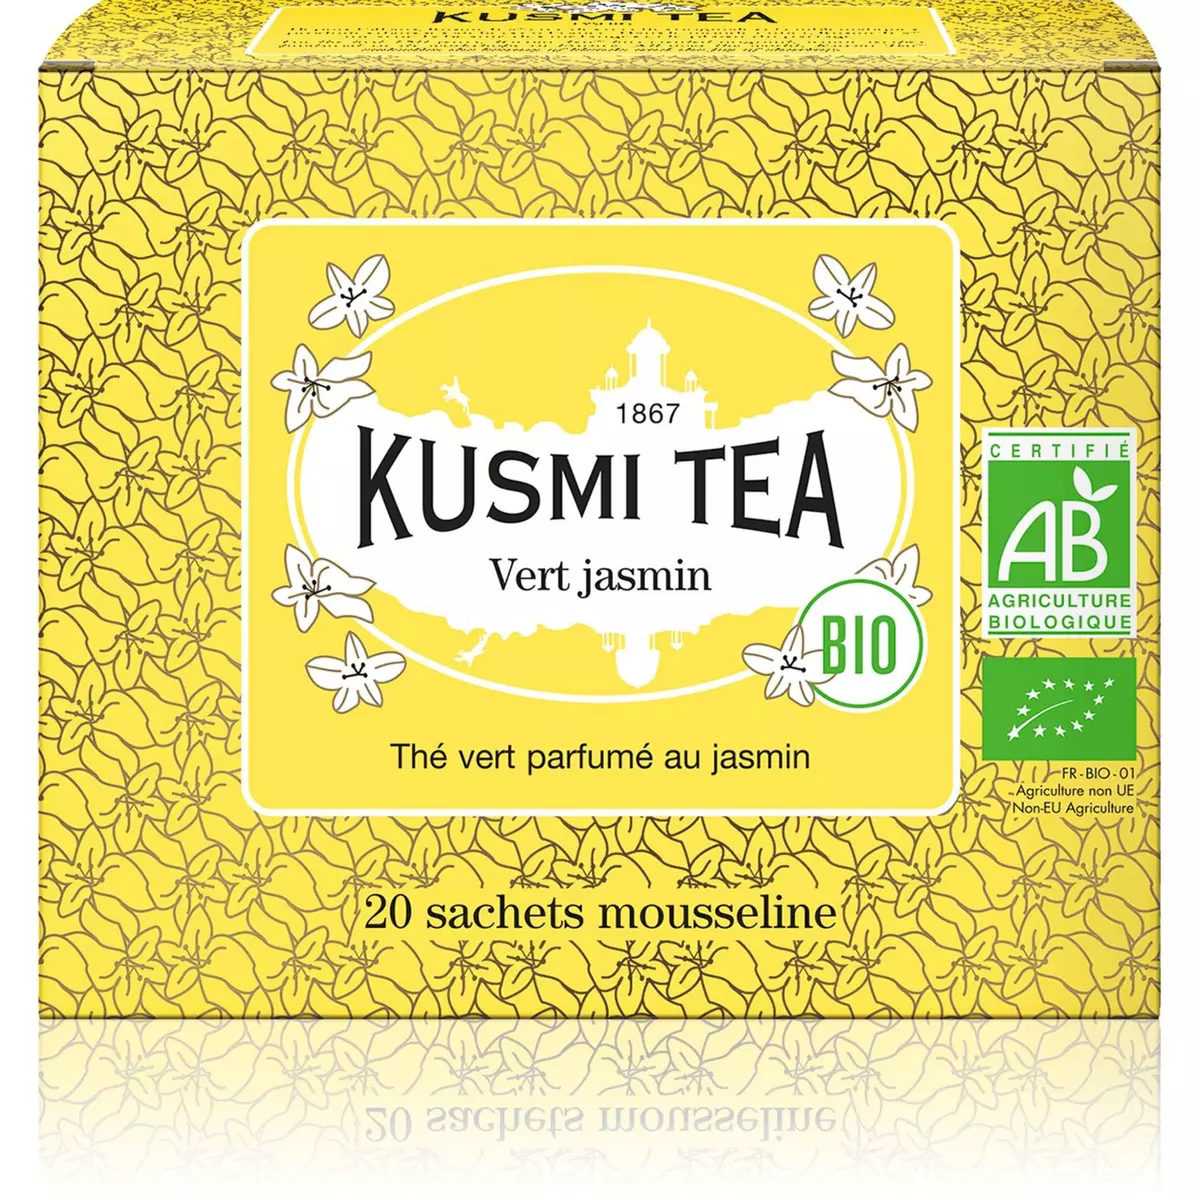 Thé Vert menthe Kusmi Tea bio - Achat pas cher